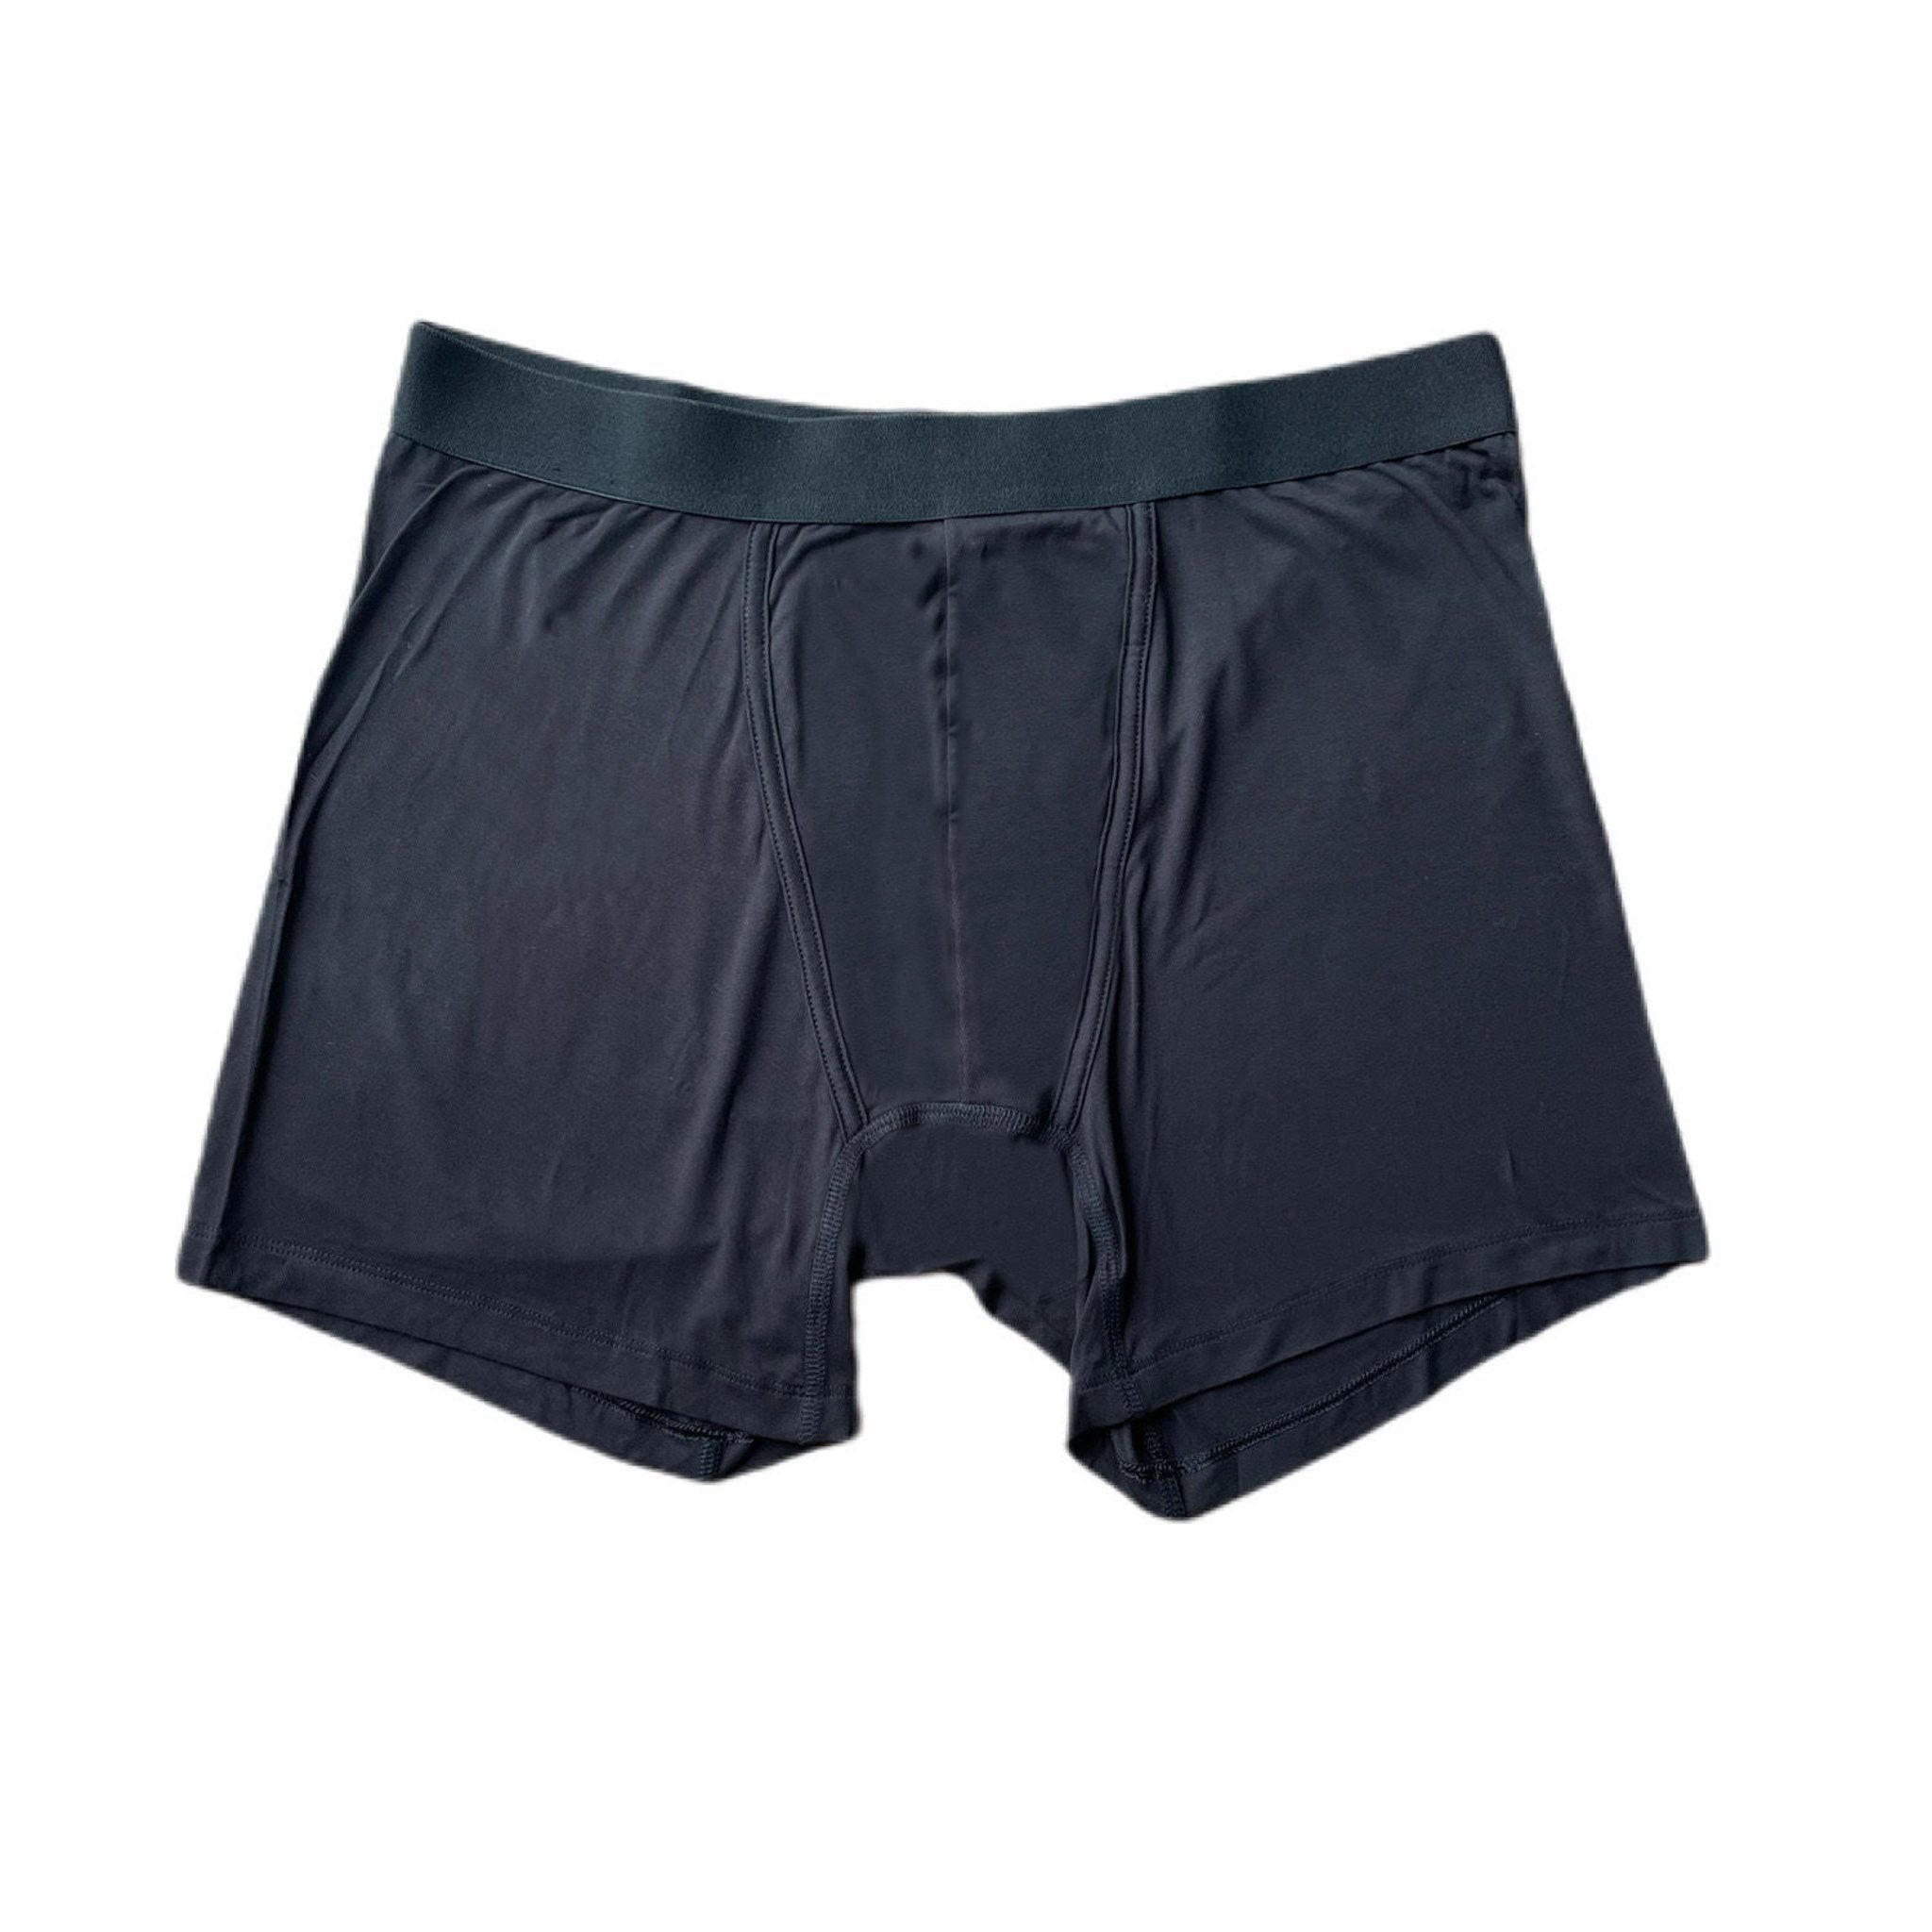 Bamboo Men Underwear – Bamboo Underwear